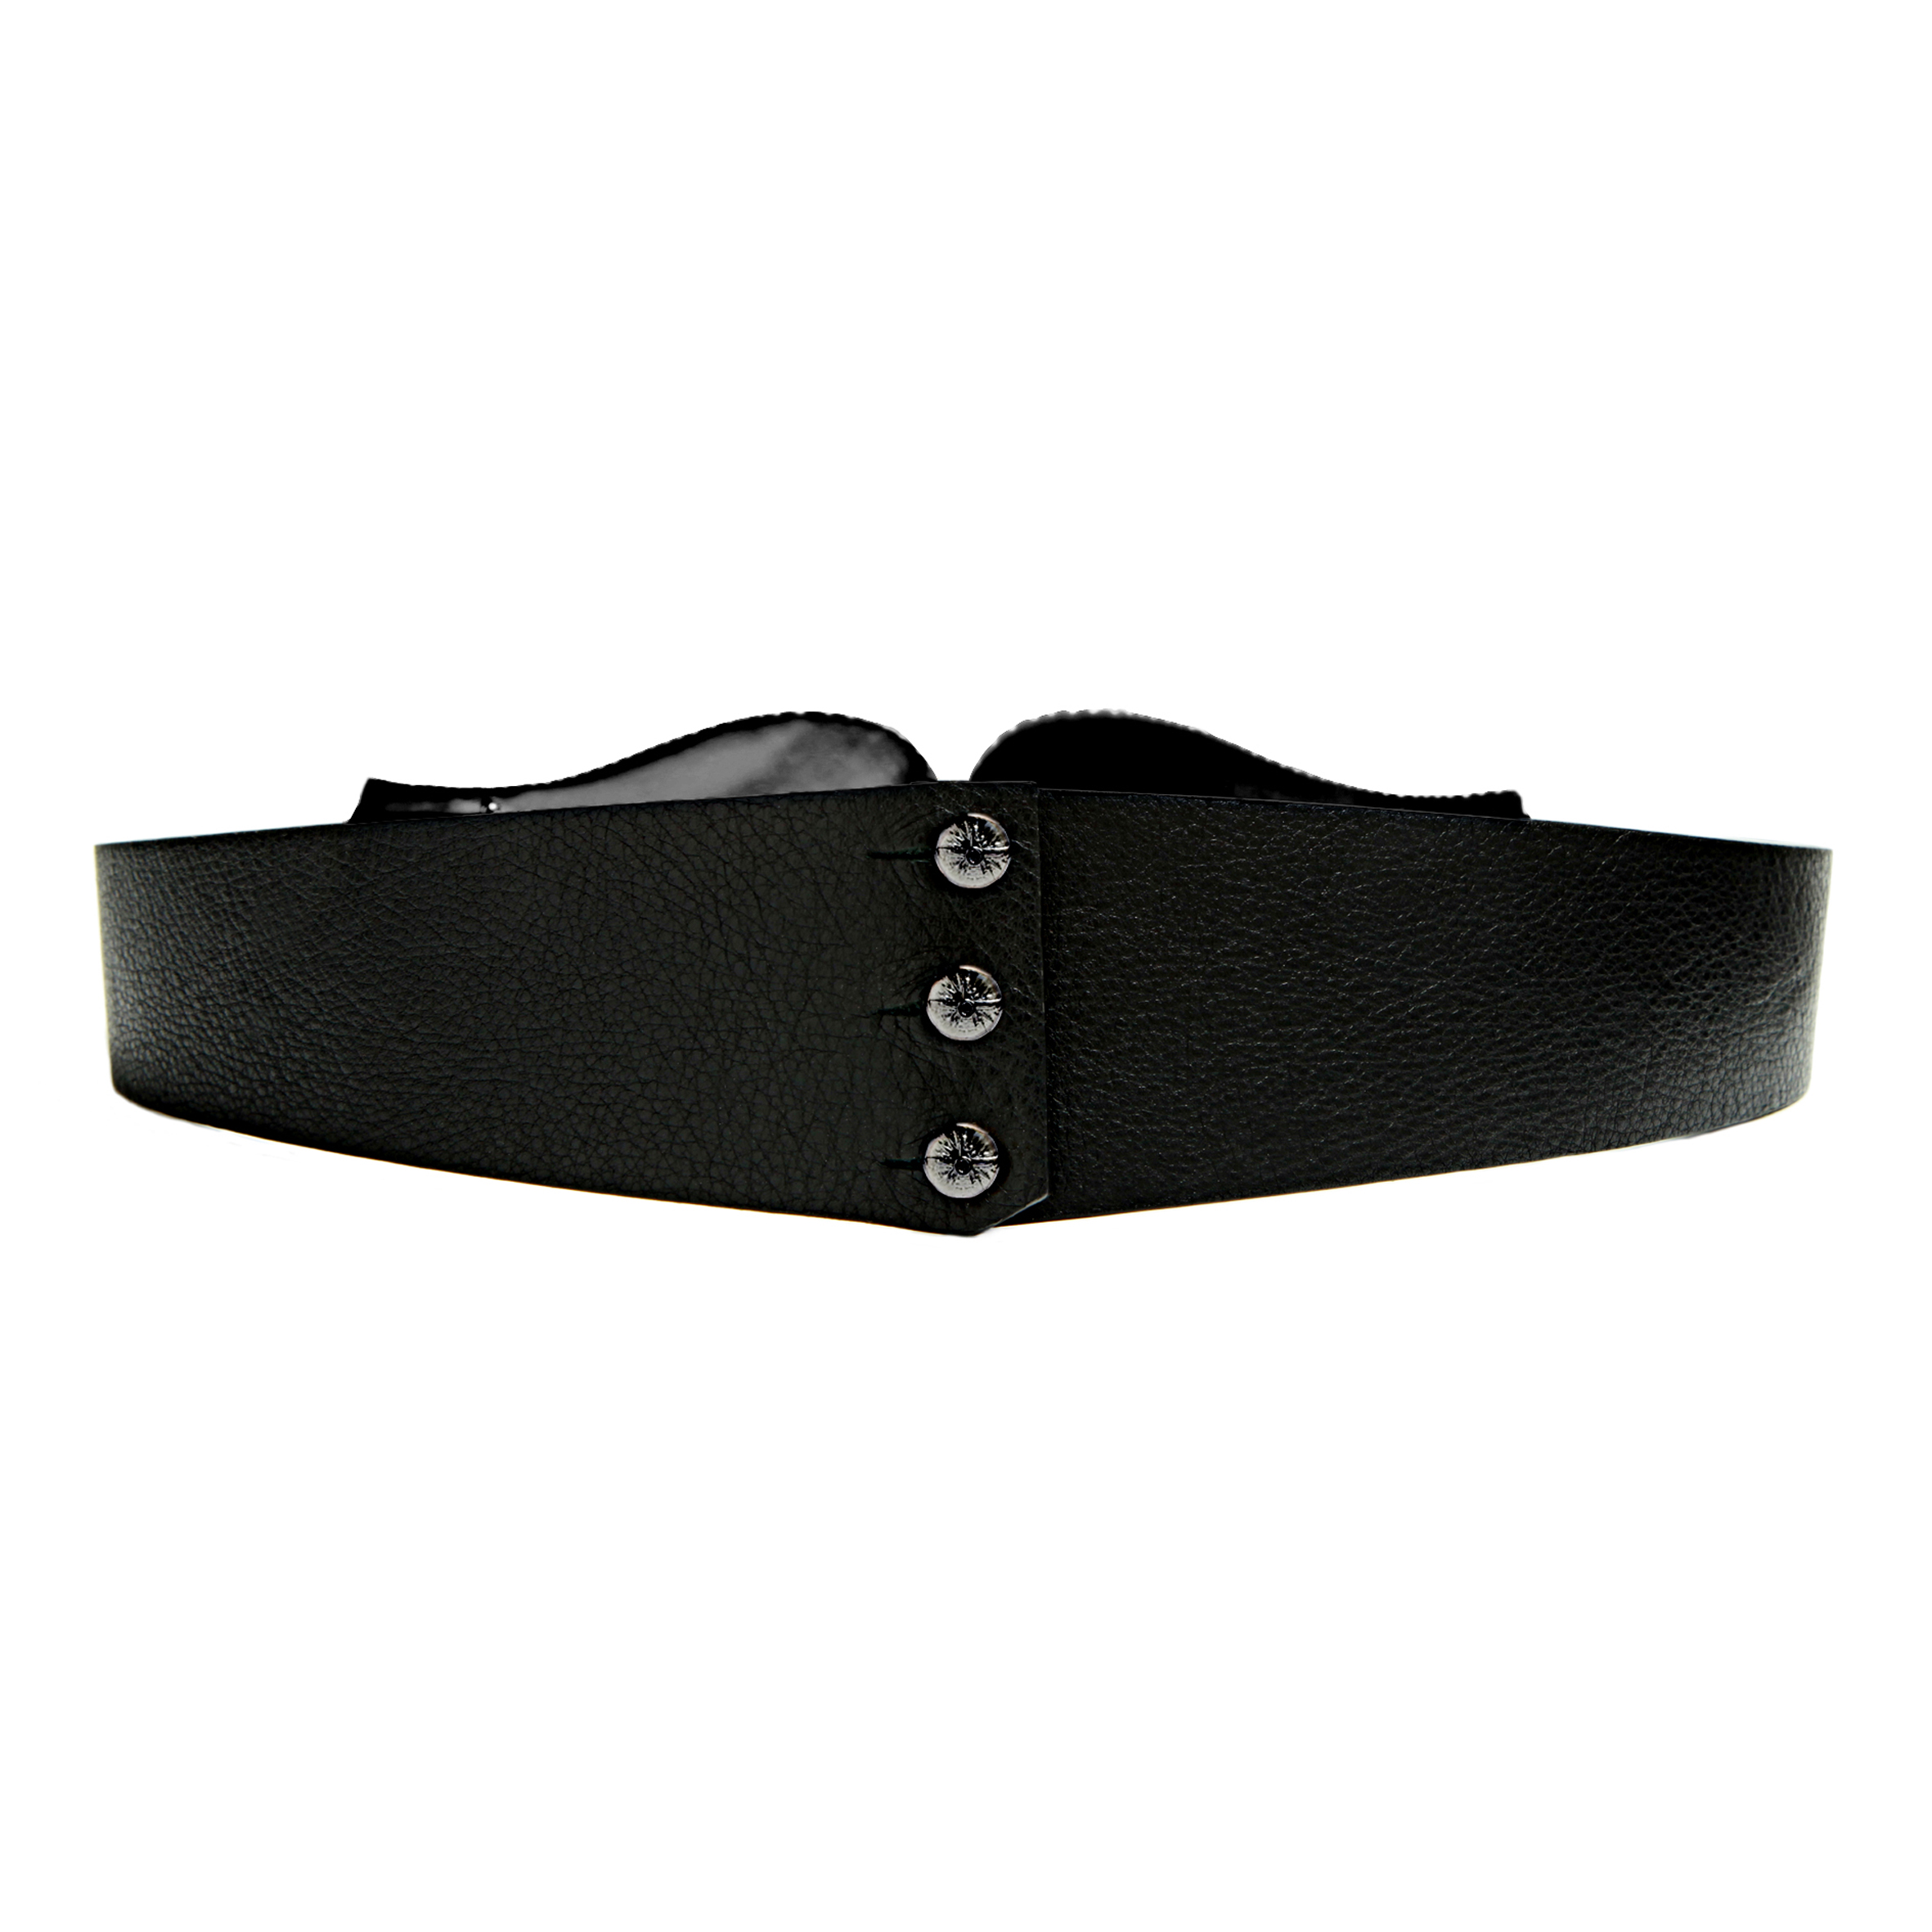 Cyrus waist belt3 – black